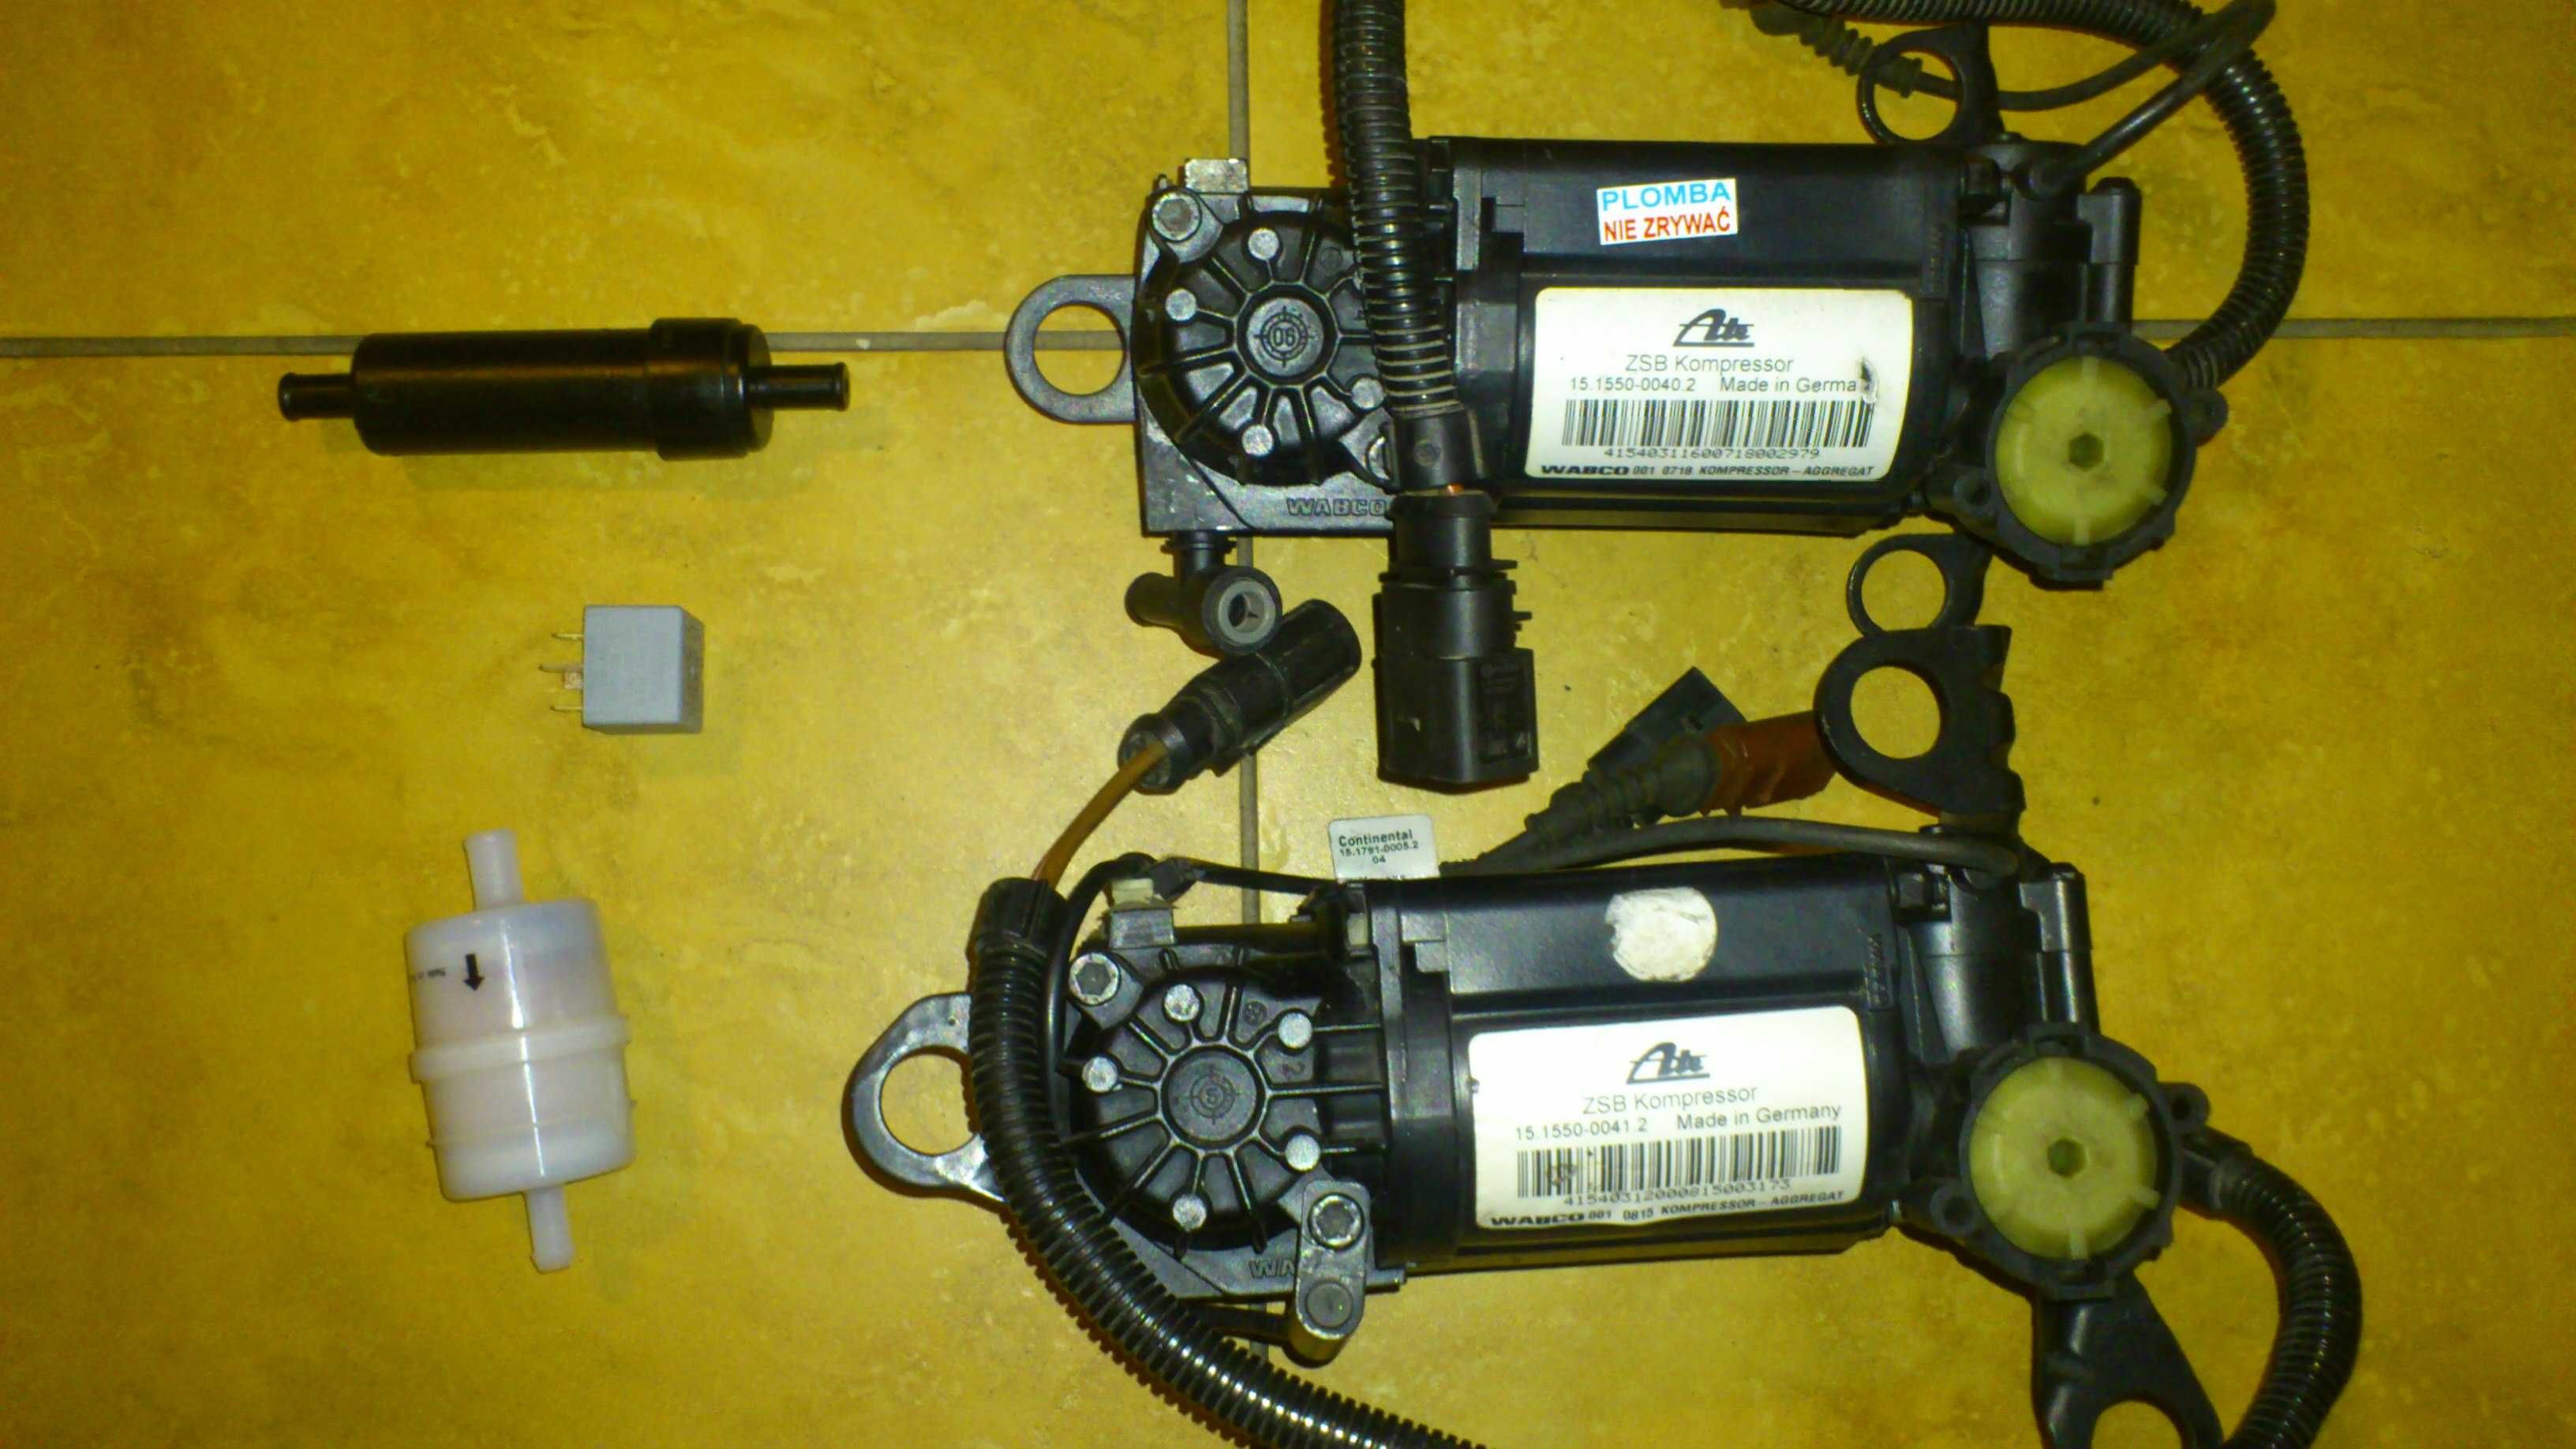 Kompresor pompa spręzarka zawieszenia Audi A8 D3 D4  Q7 A6 C5 4F 4G A7